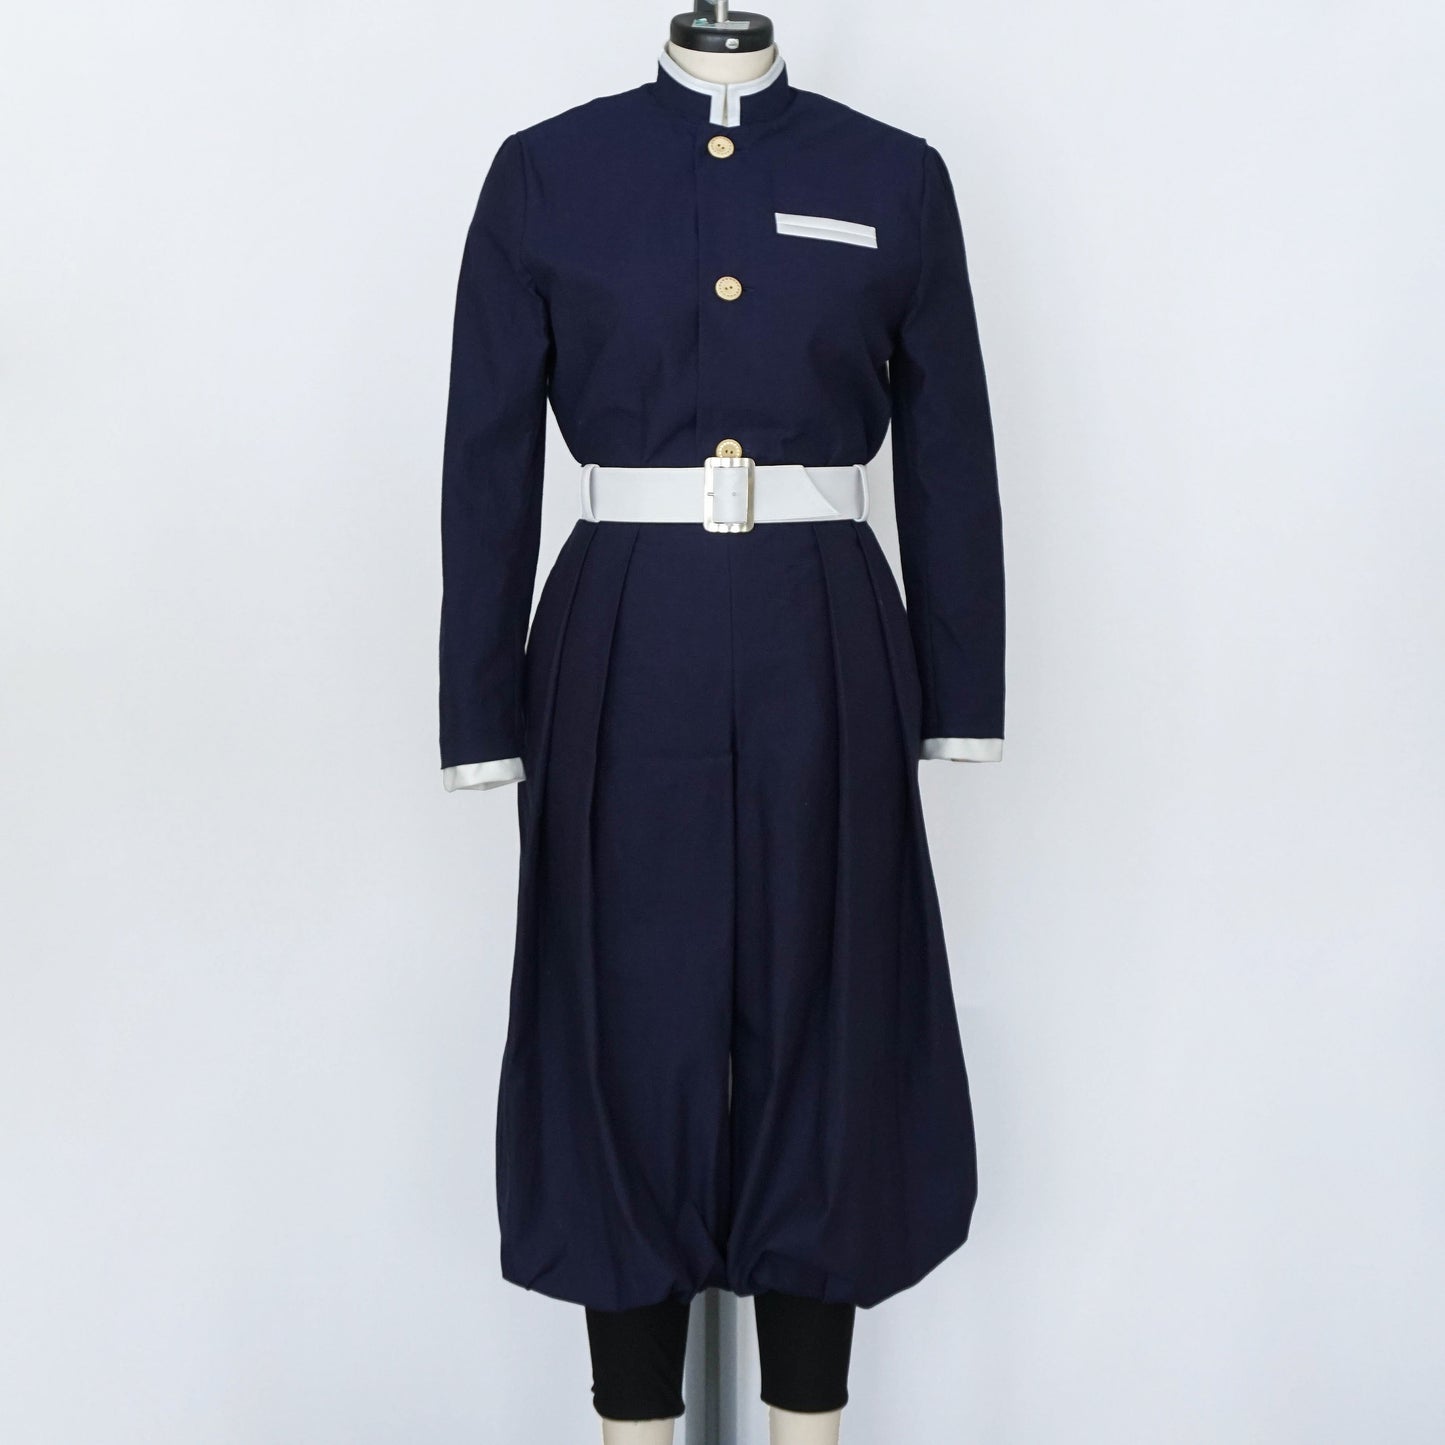 BUNDLE Japanese Uniform Cosplay Sewing Pattern/Downloadable PDF File